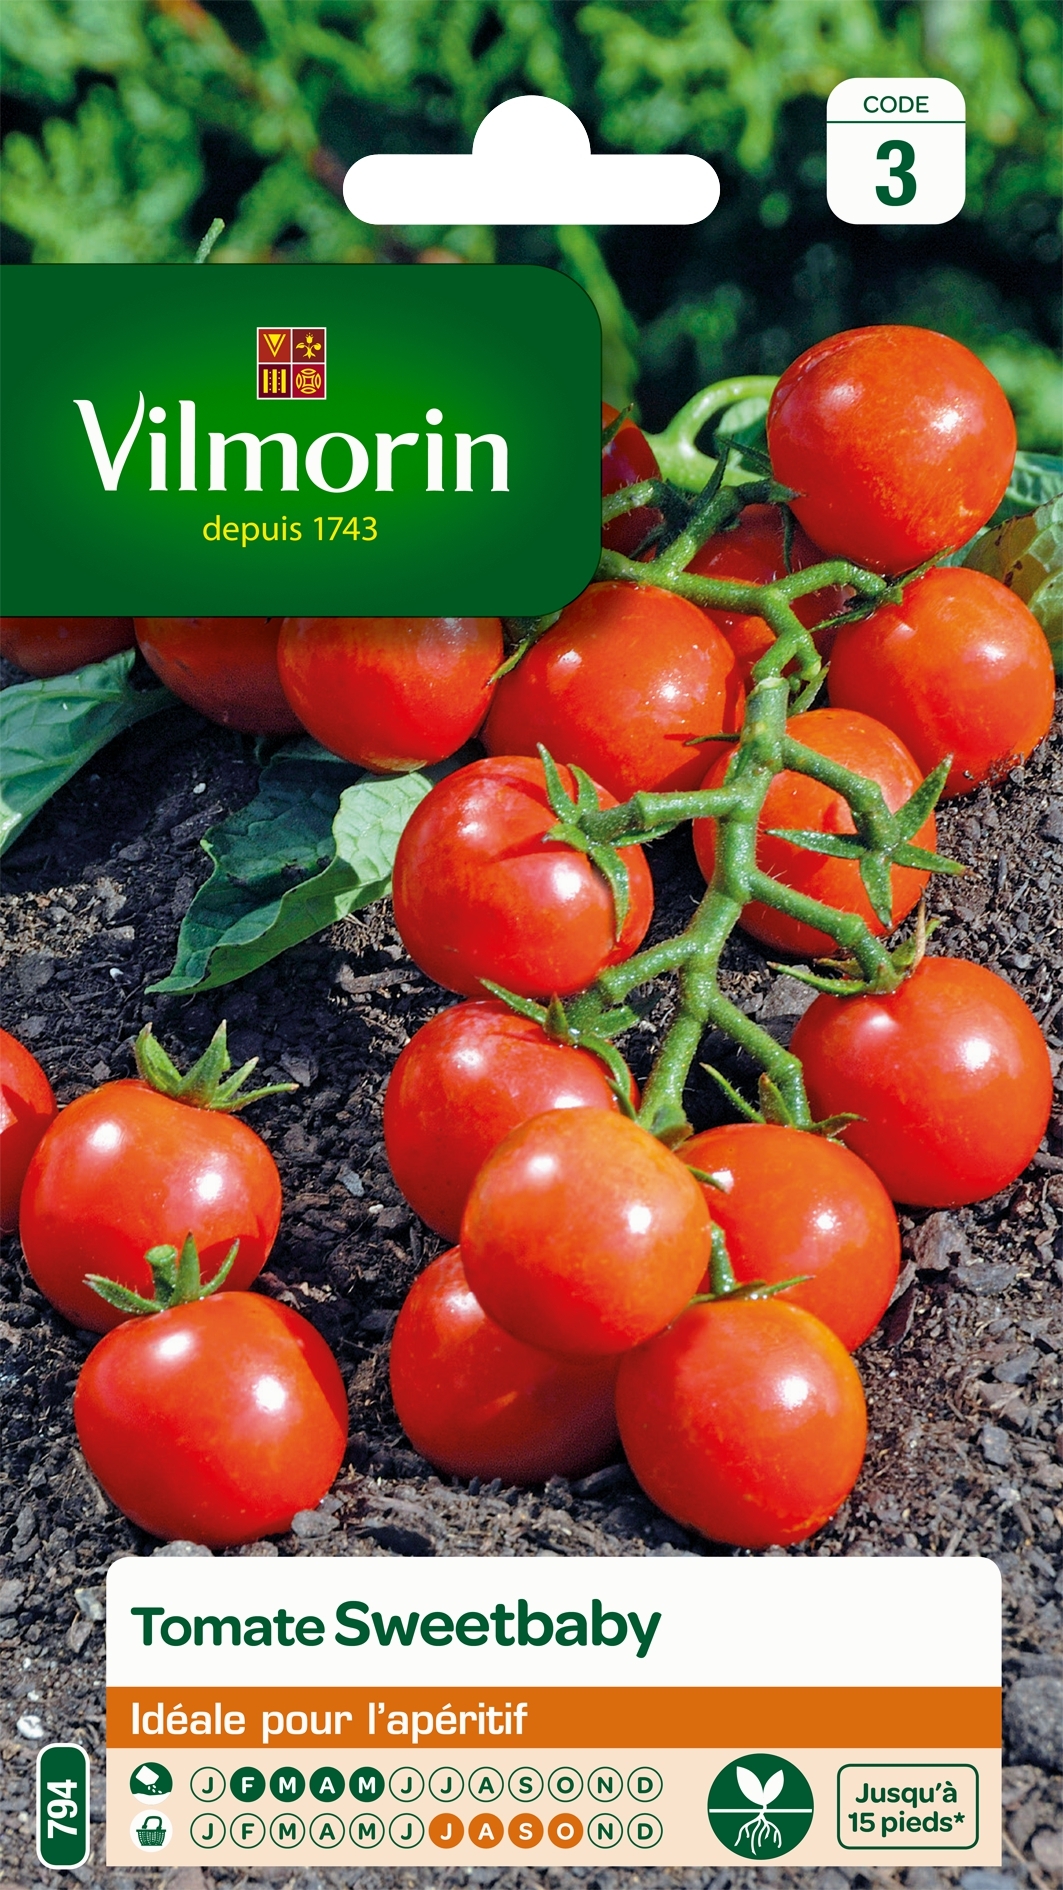 Tomate cerise Sweetbaby - Graines Vilmorin